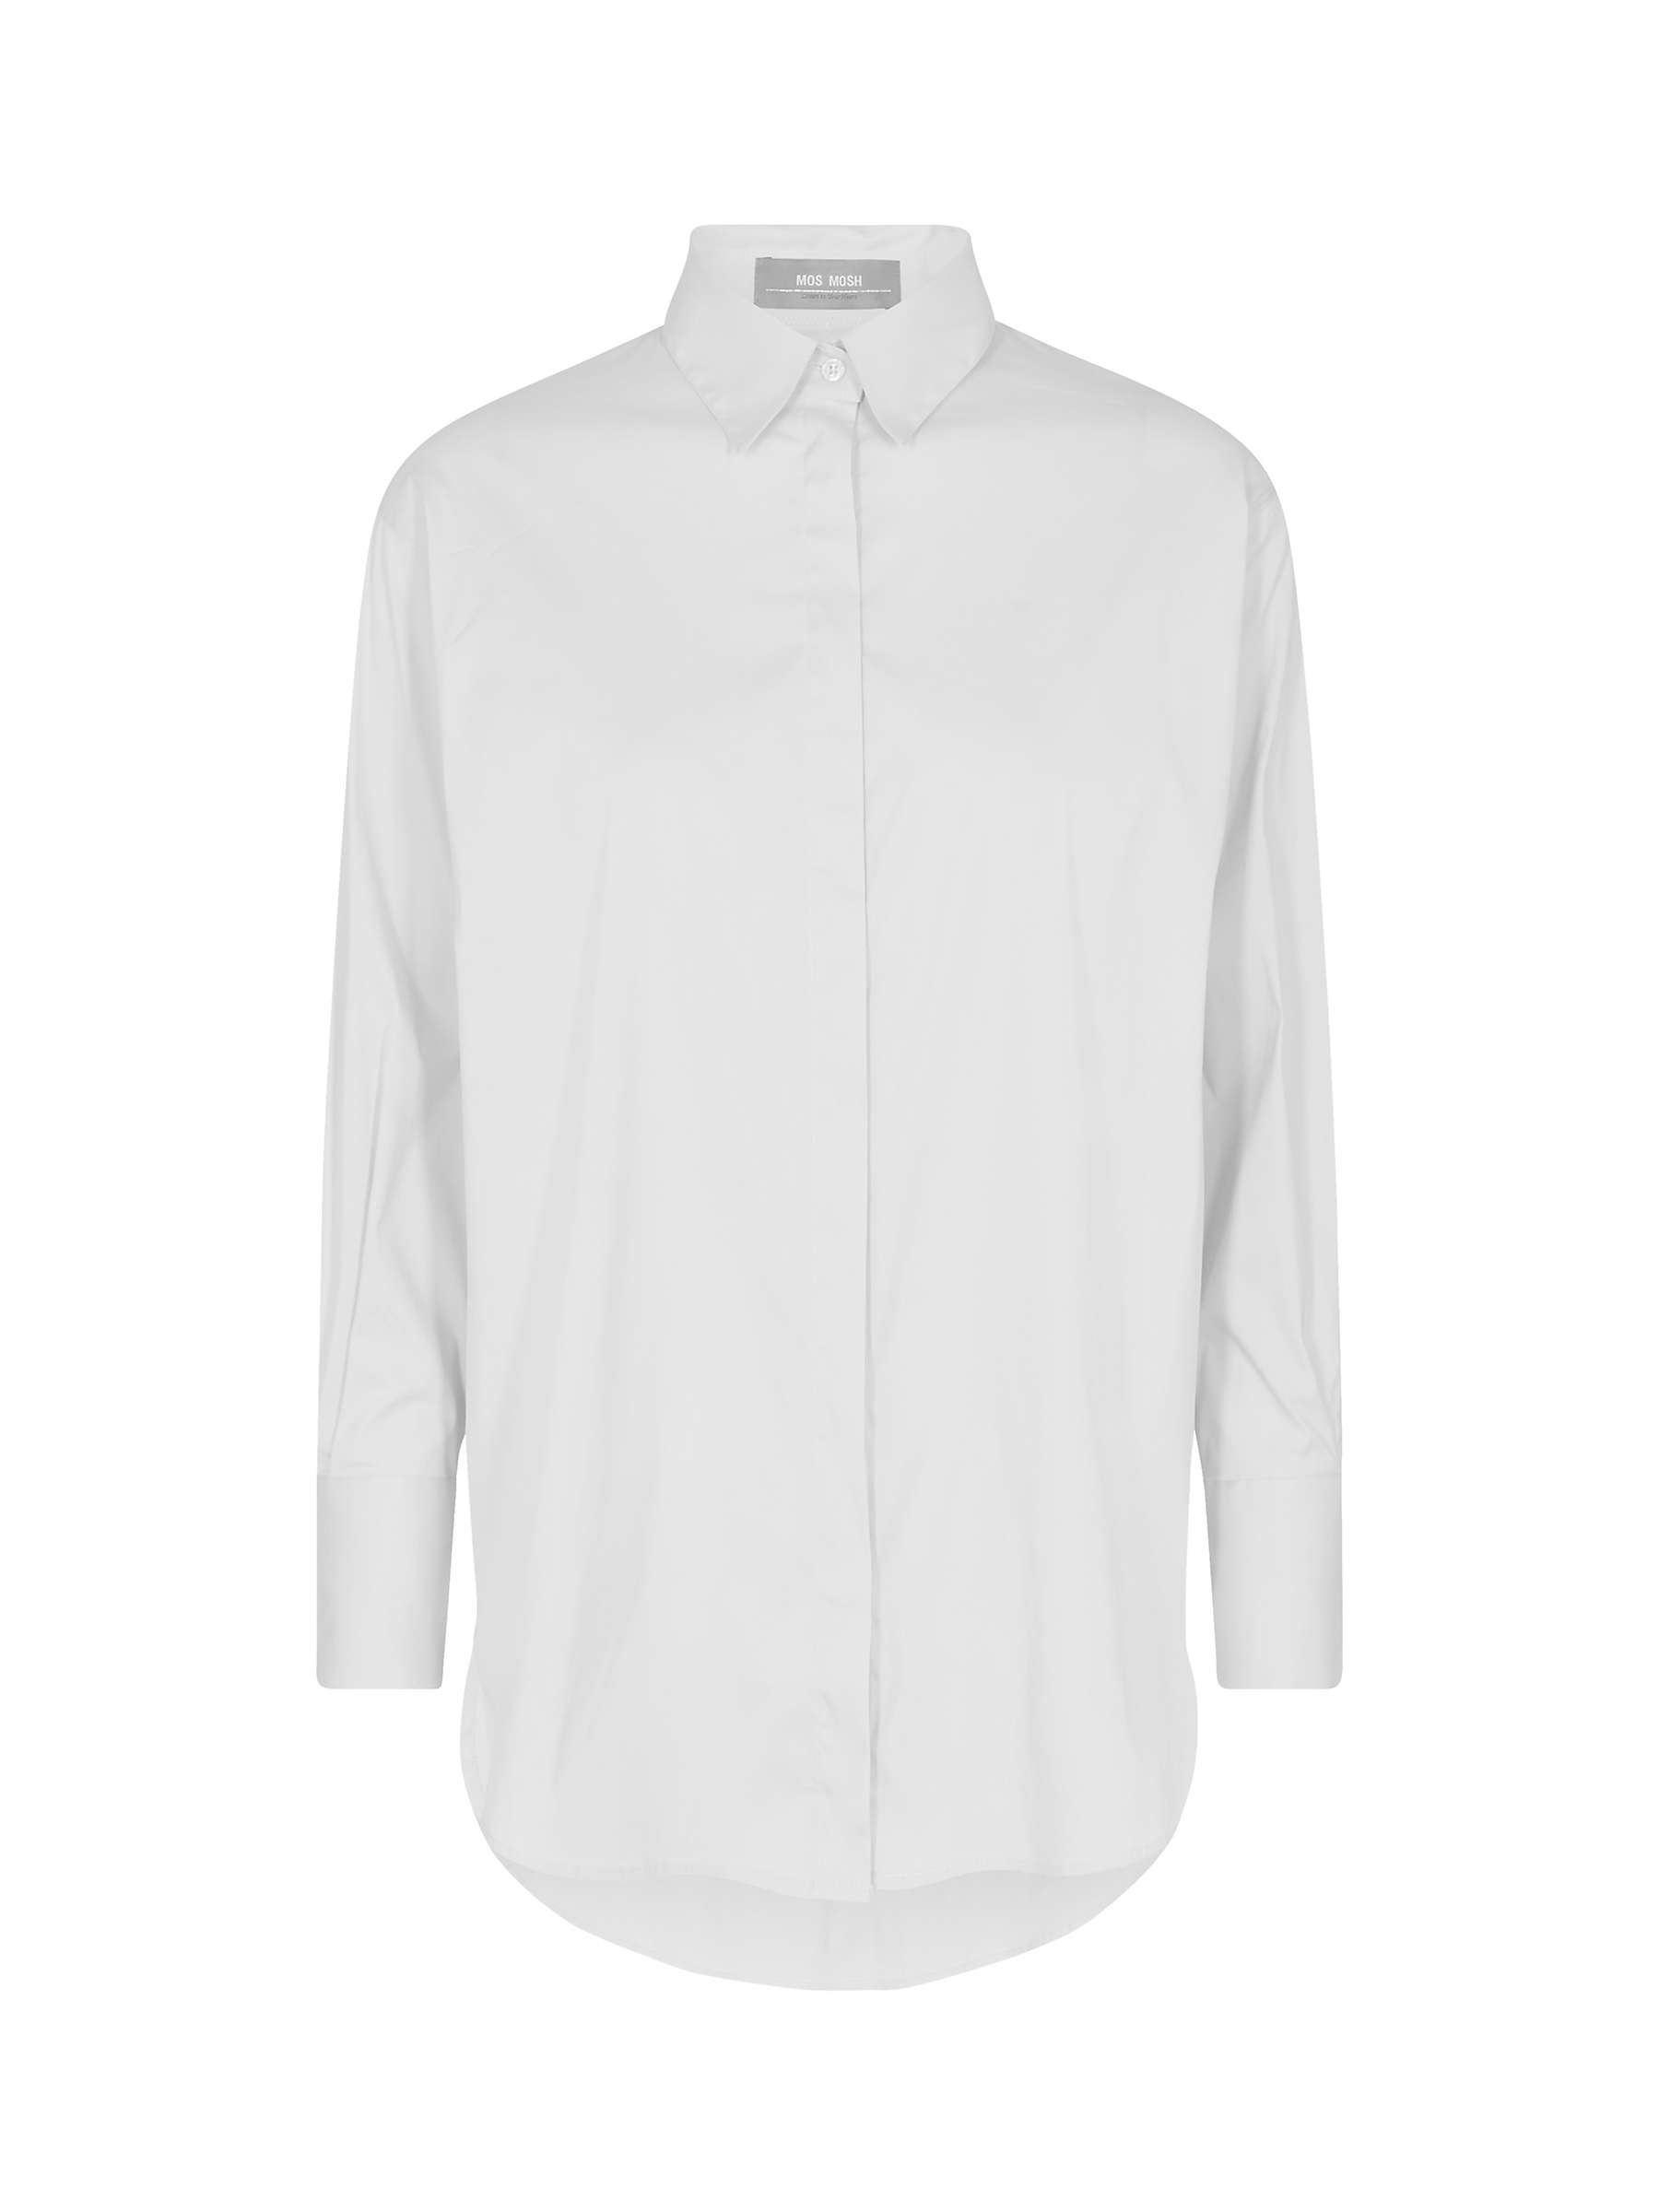 MOS MOSH Enola Classic Shirt, White at John Lewis & Partners